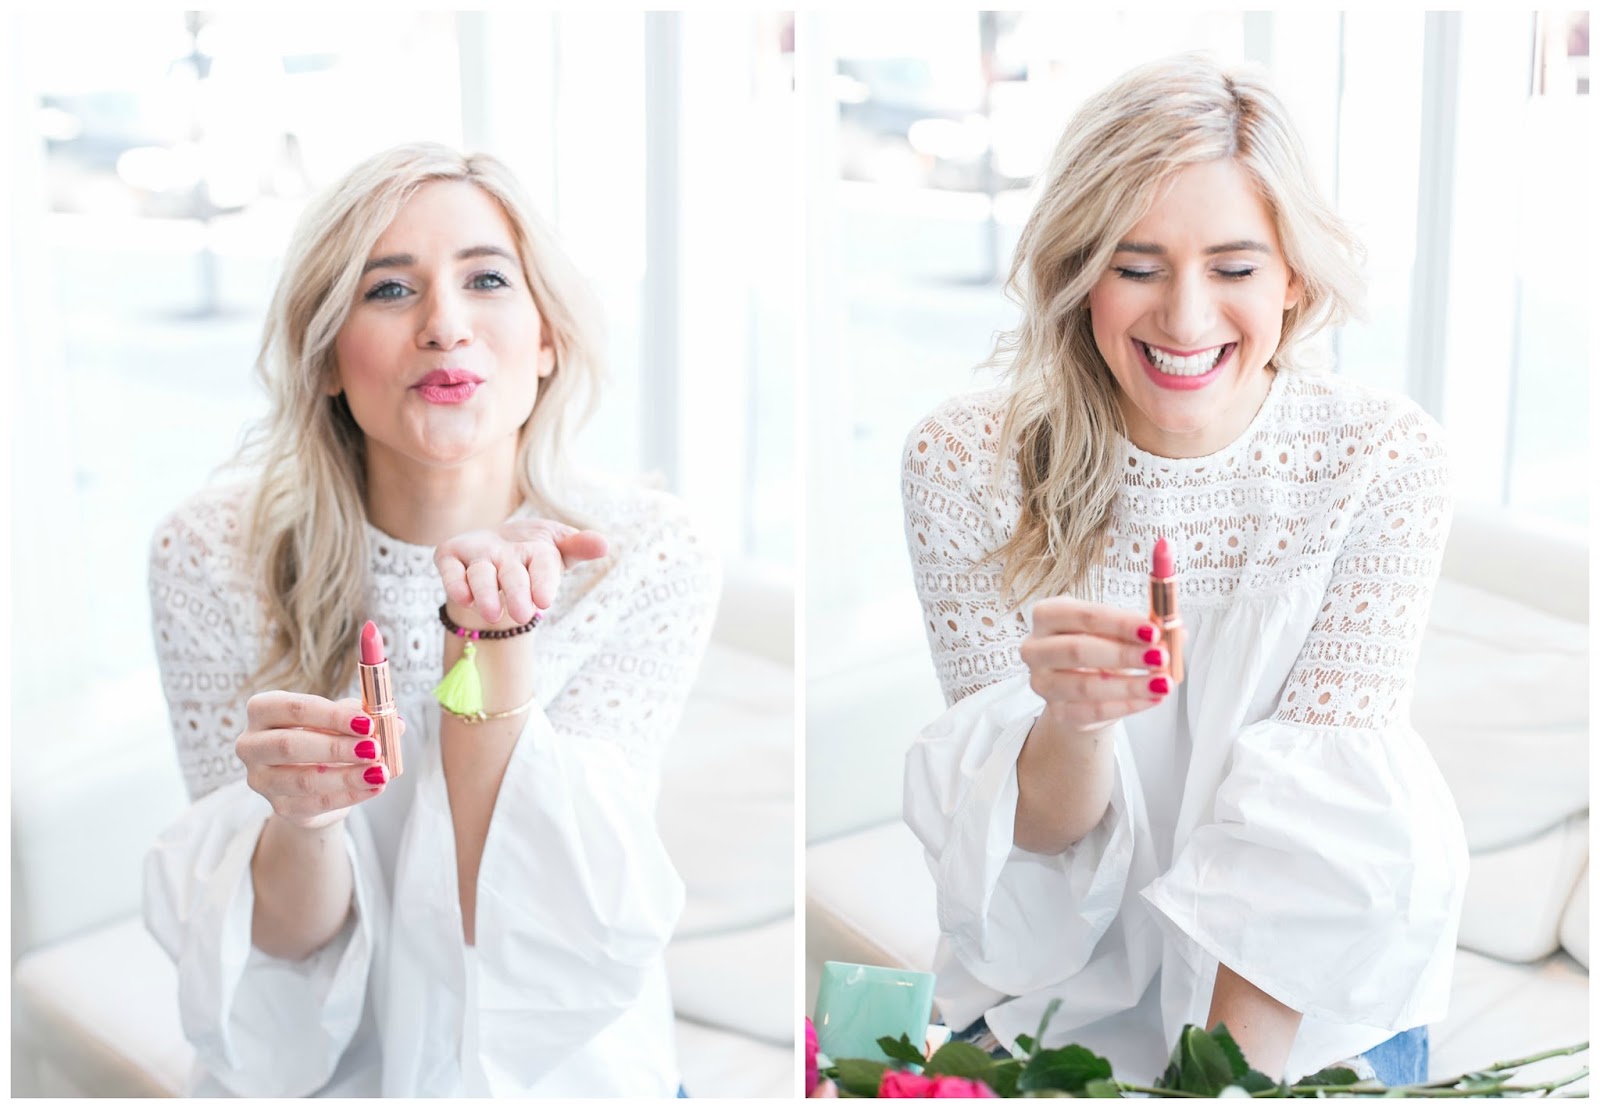 3 Charlotte Tilbury Lipsticks to Try This Spring 